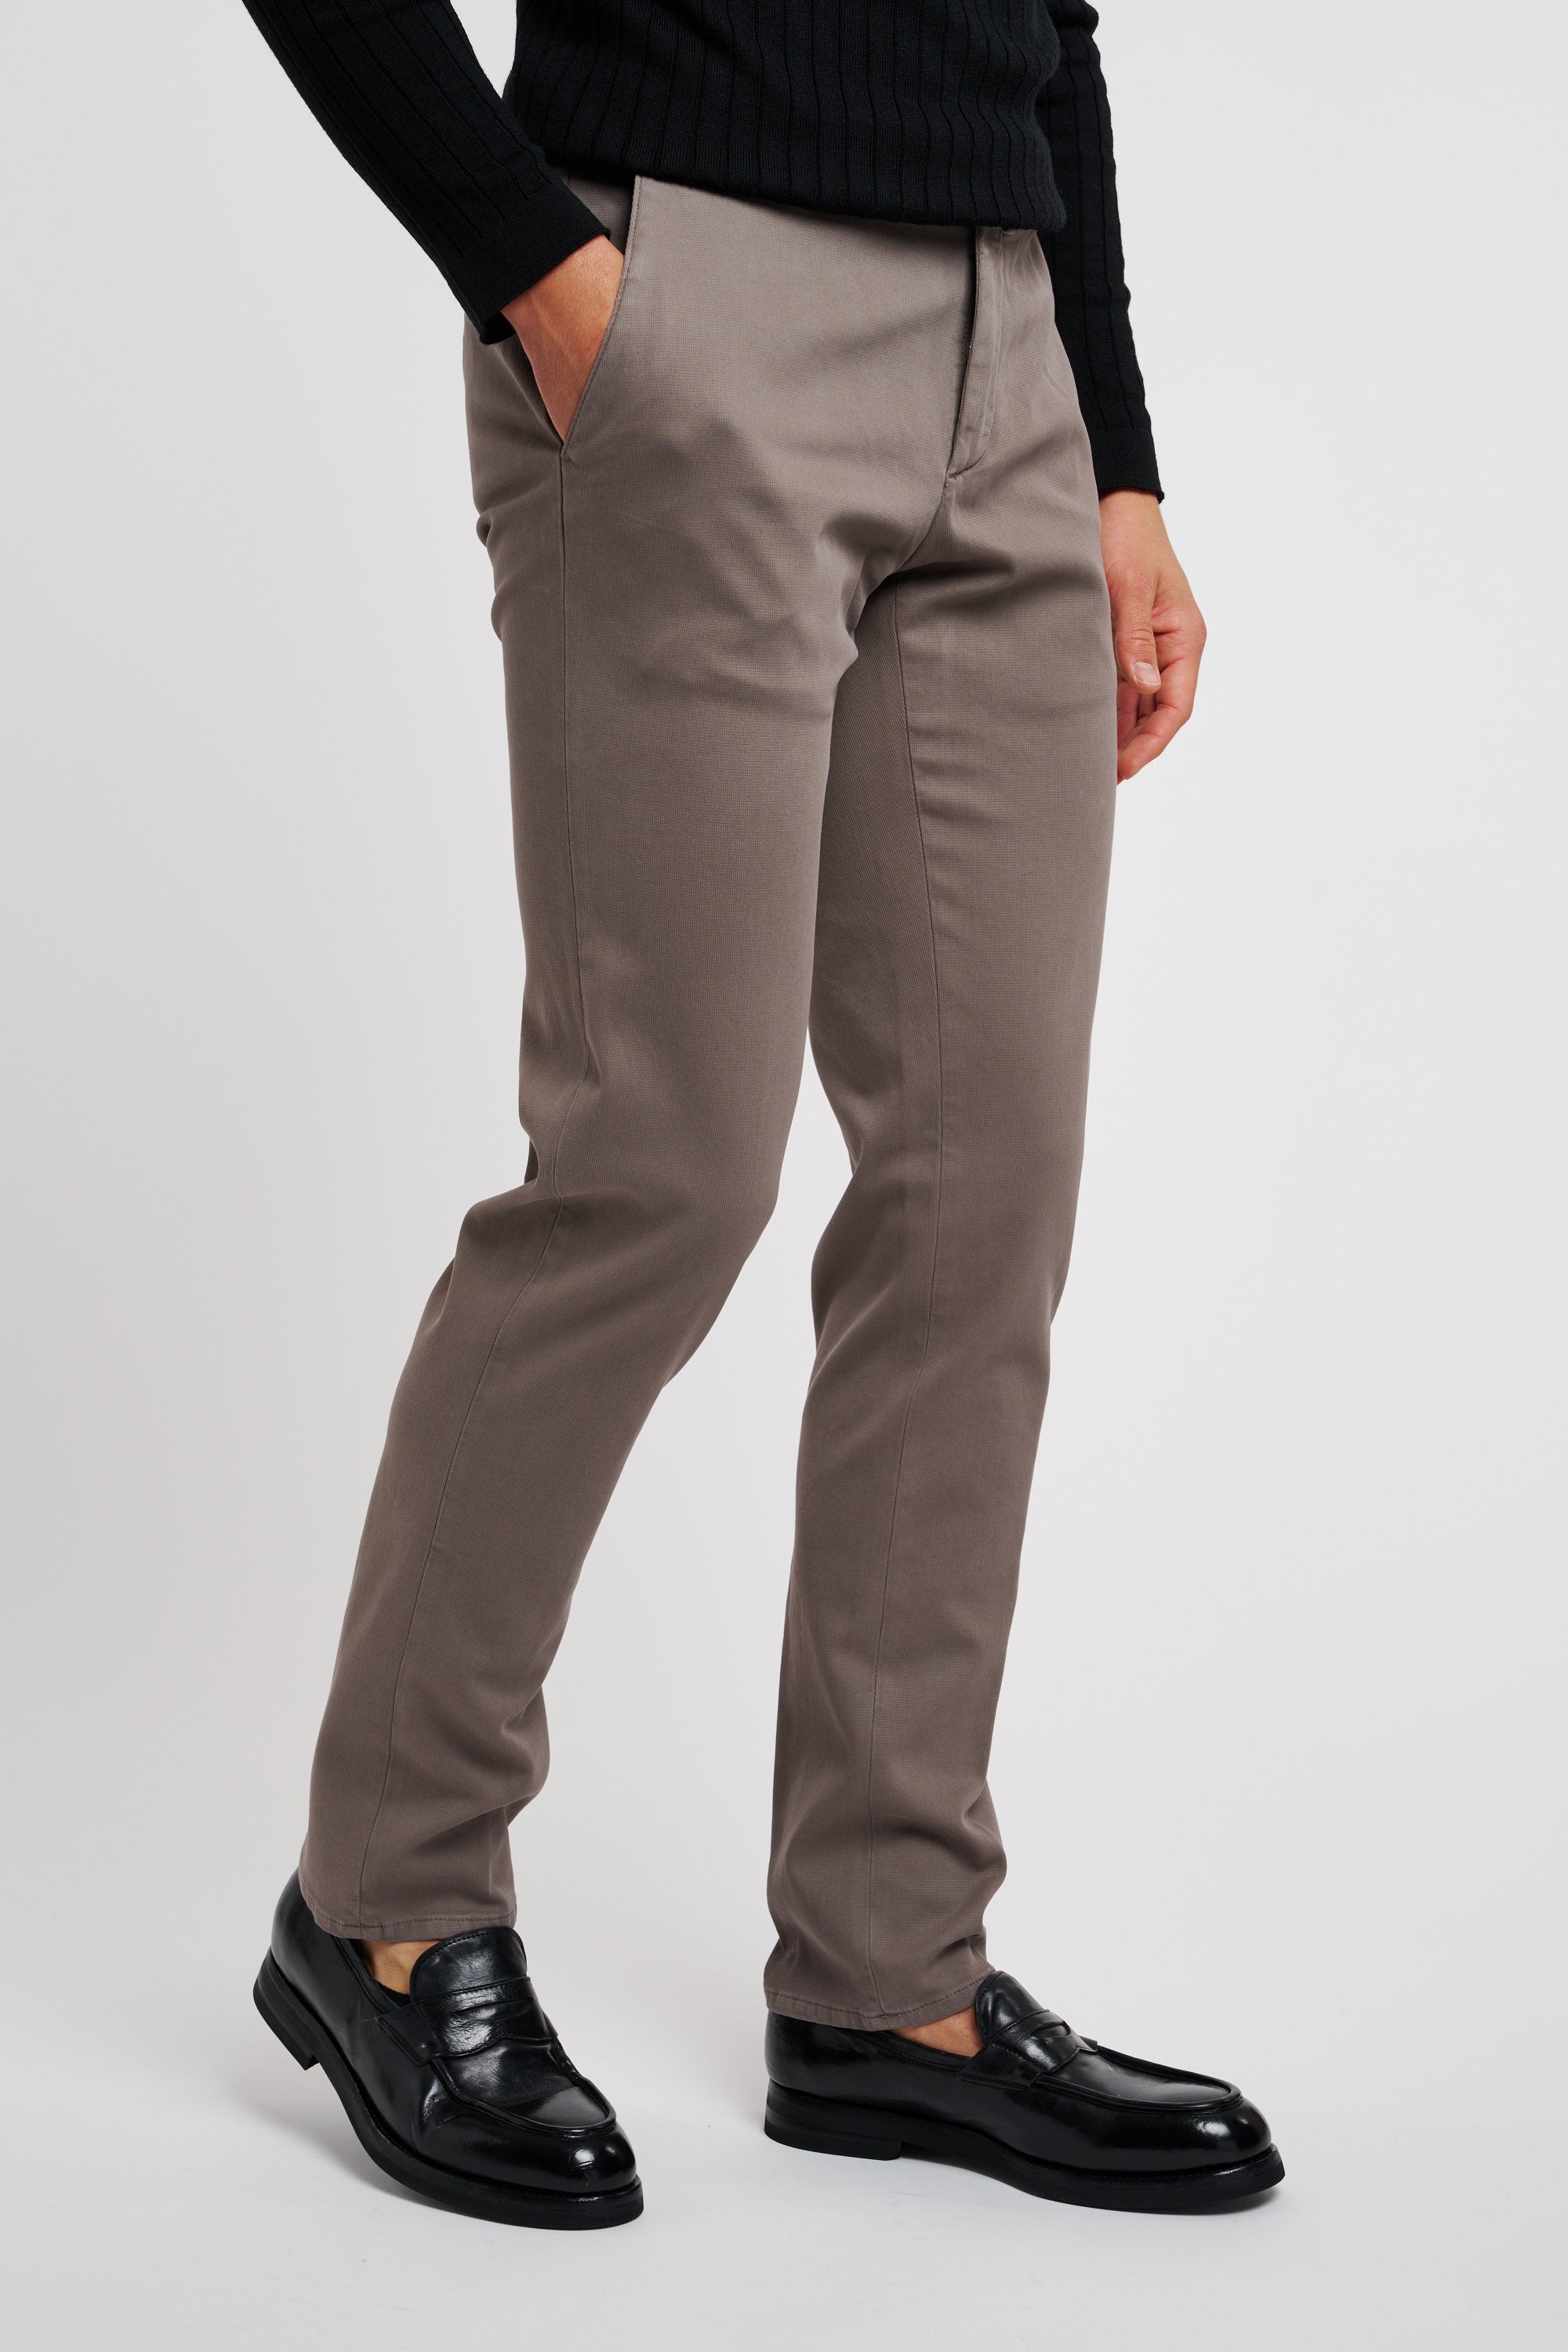 GTA Federico Mixed Cotton Pants Grey-4